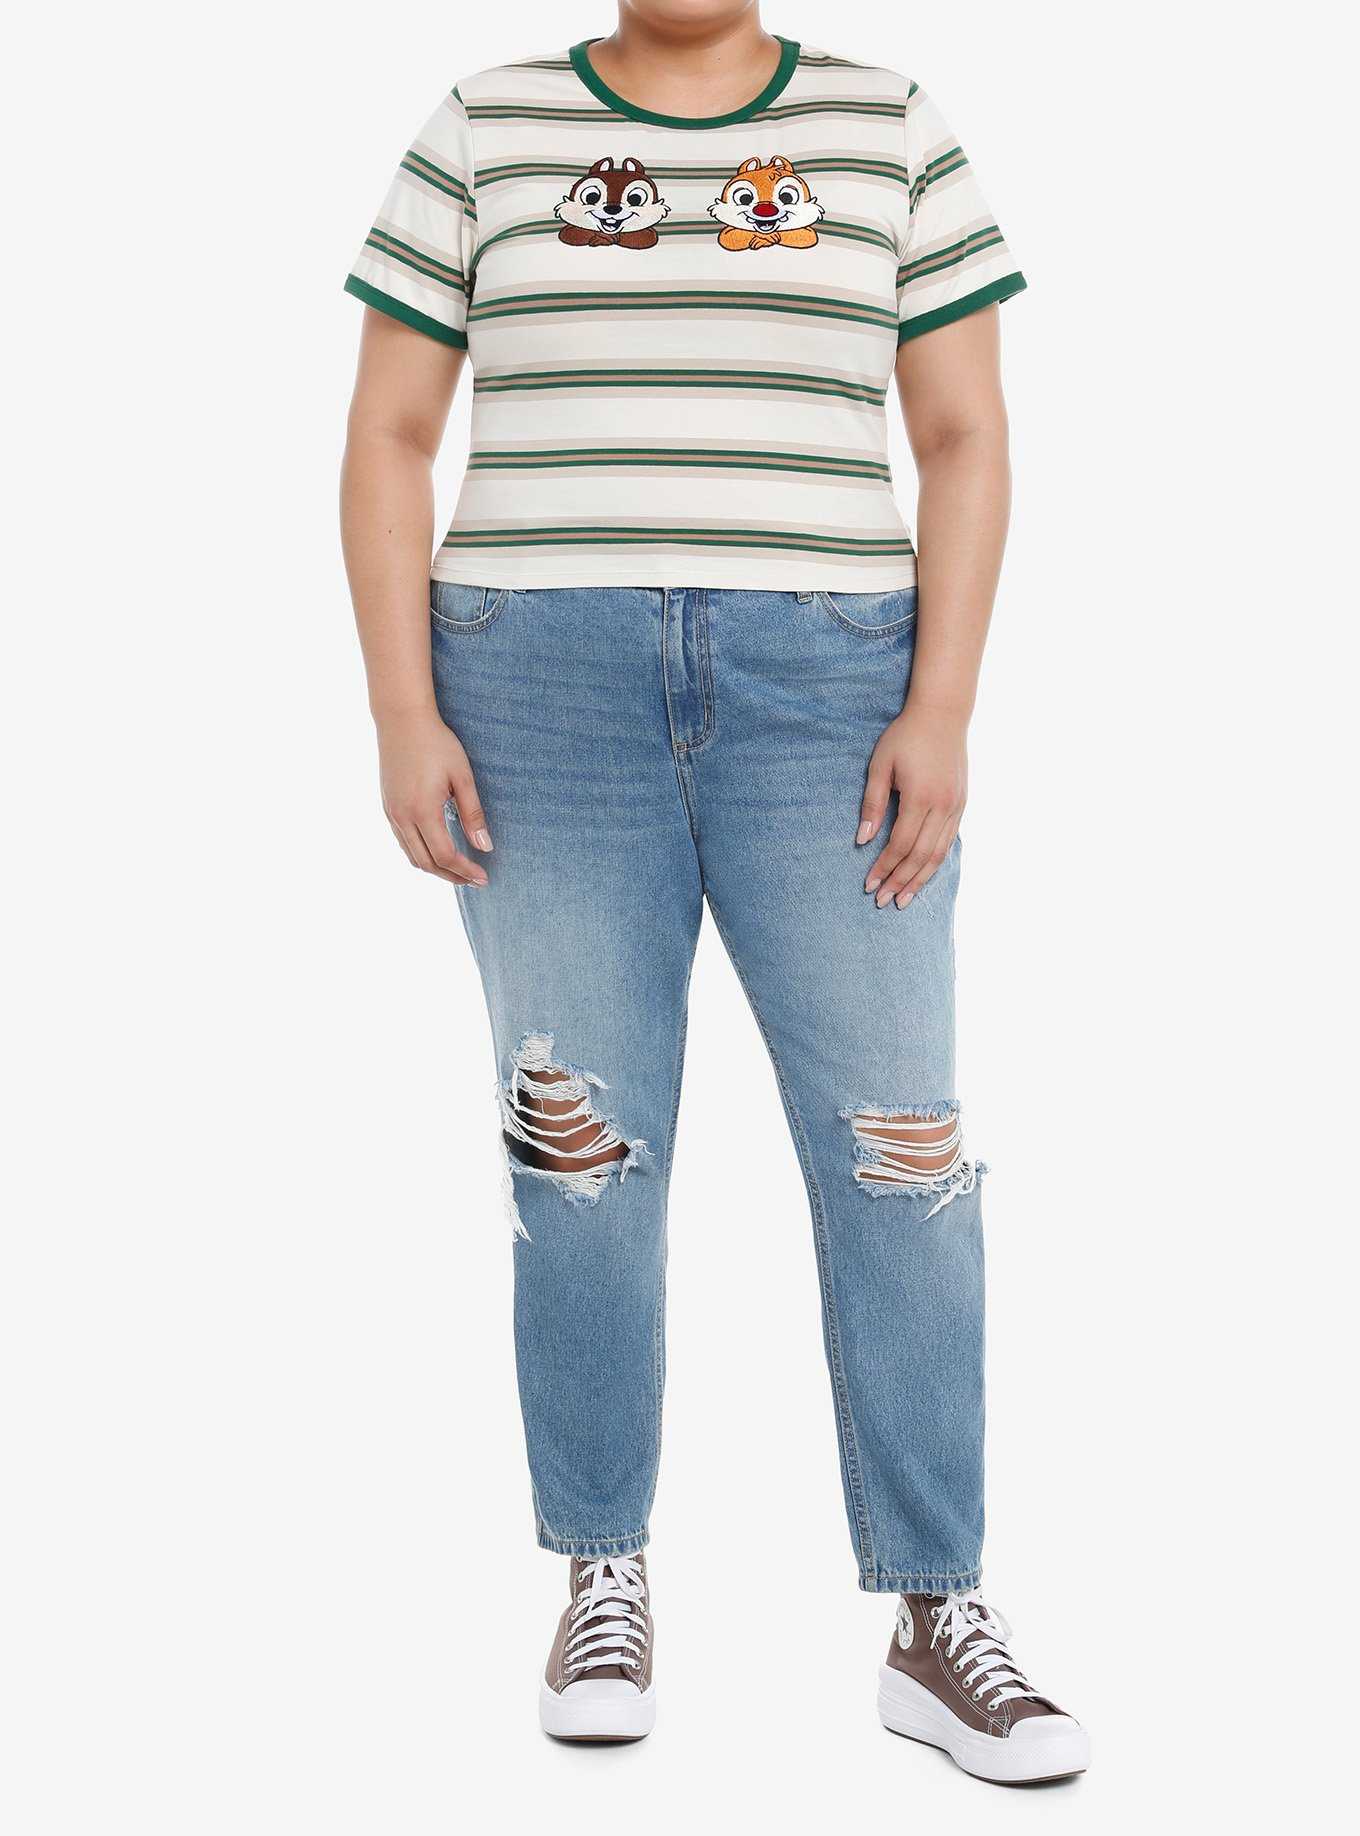 Disney Chip 'N' Dale Stripe Girls Baby Ringer T-Shirt Plus Size, , hi-res